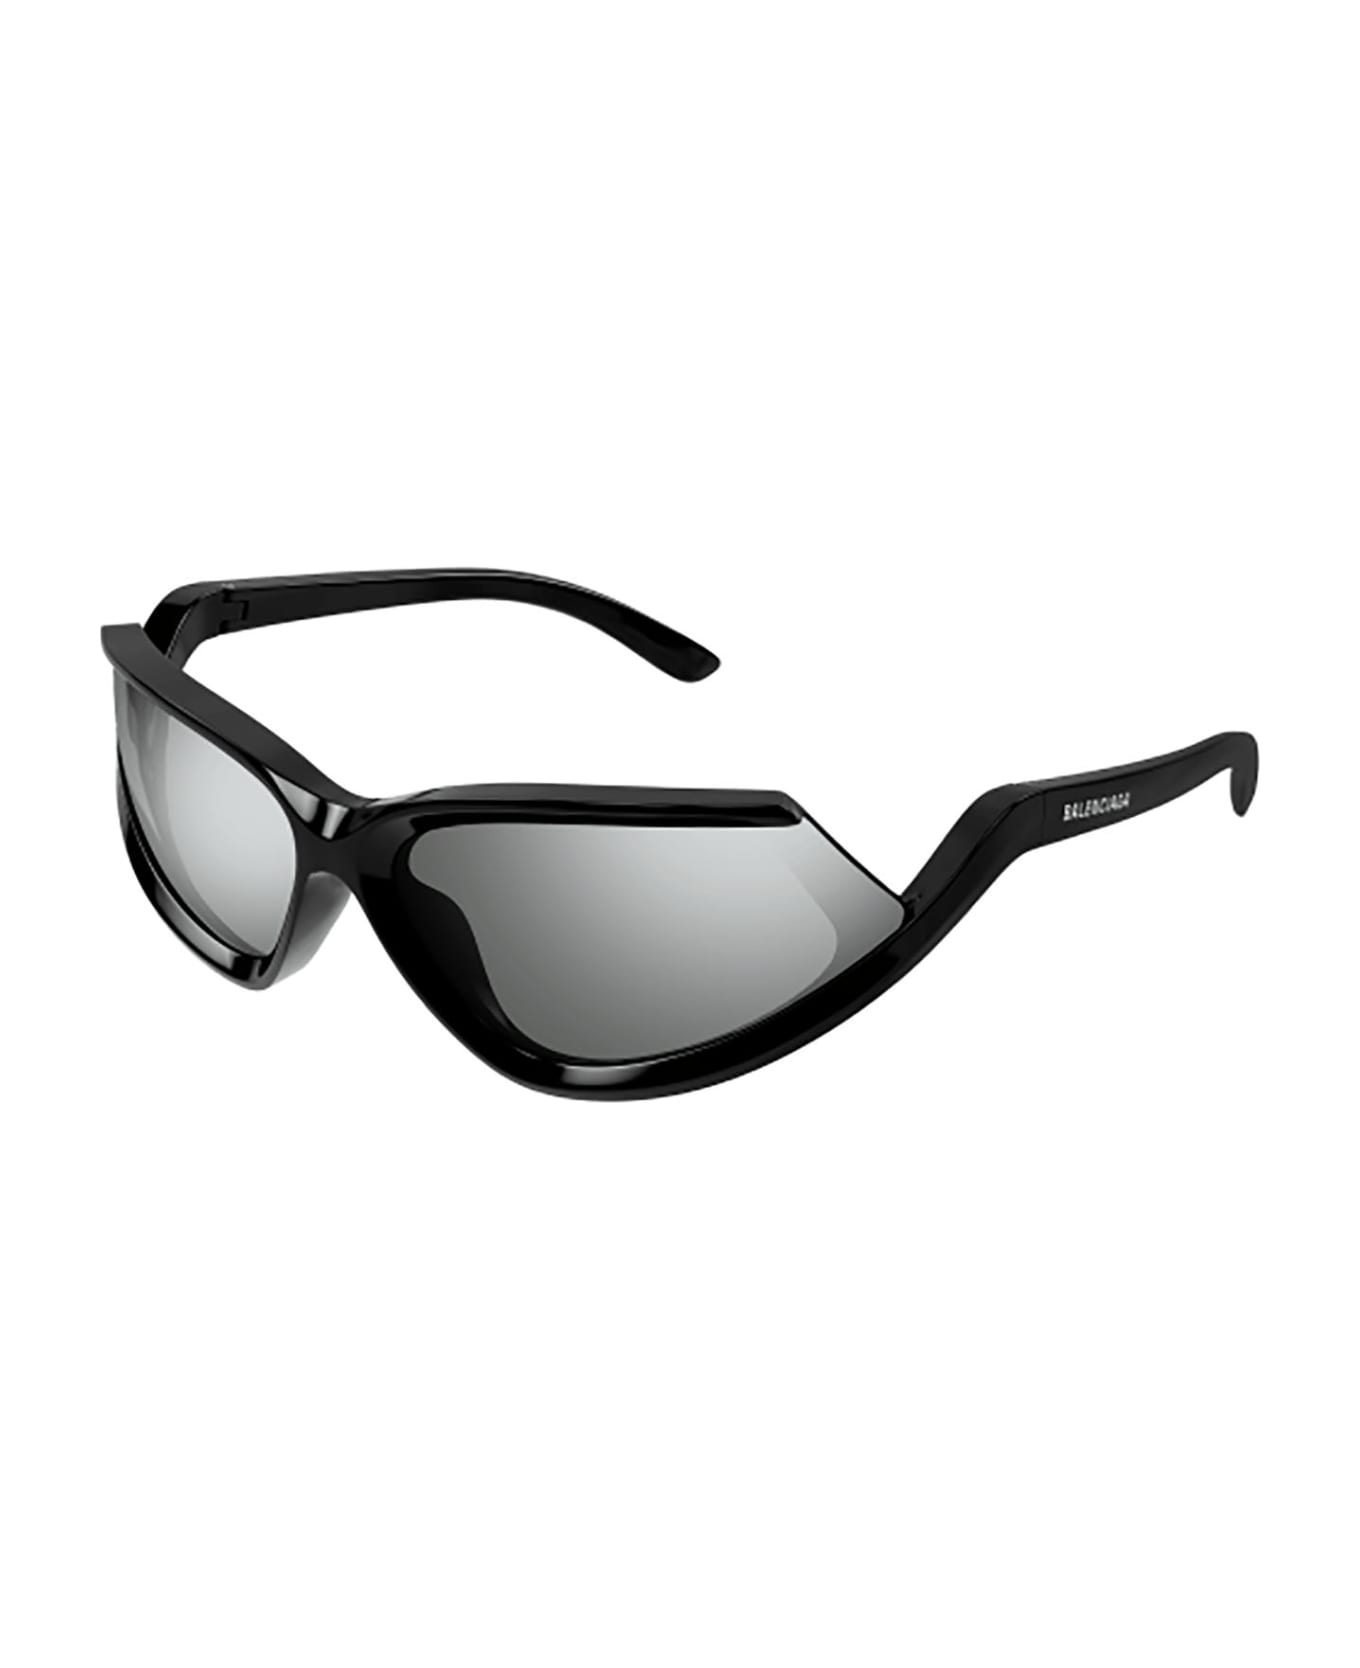 Balenciaga Eyewear Bb0289s Sunglasses - 001 black black silver